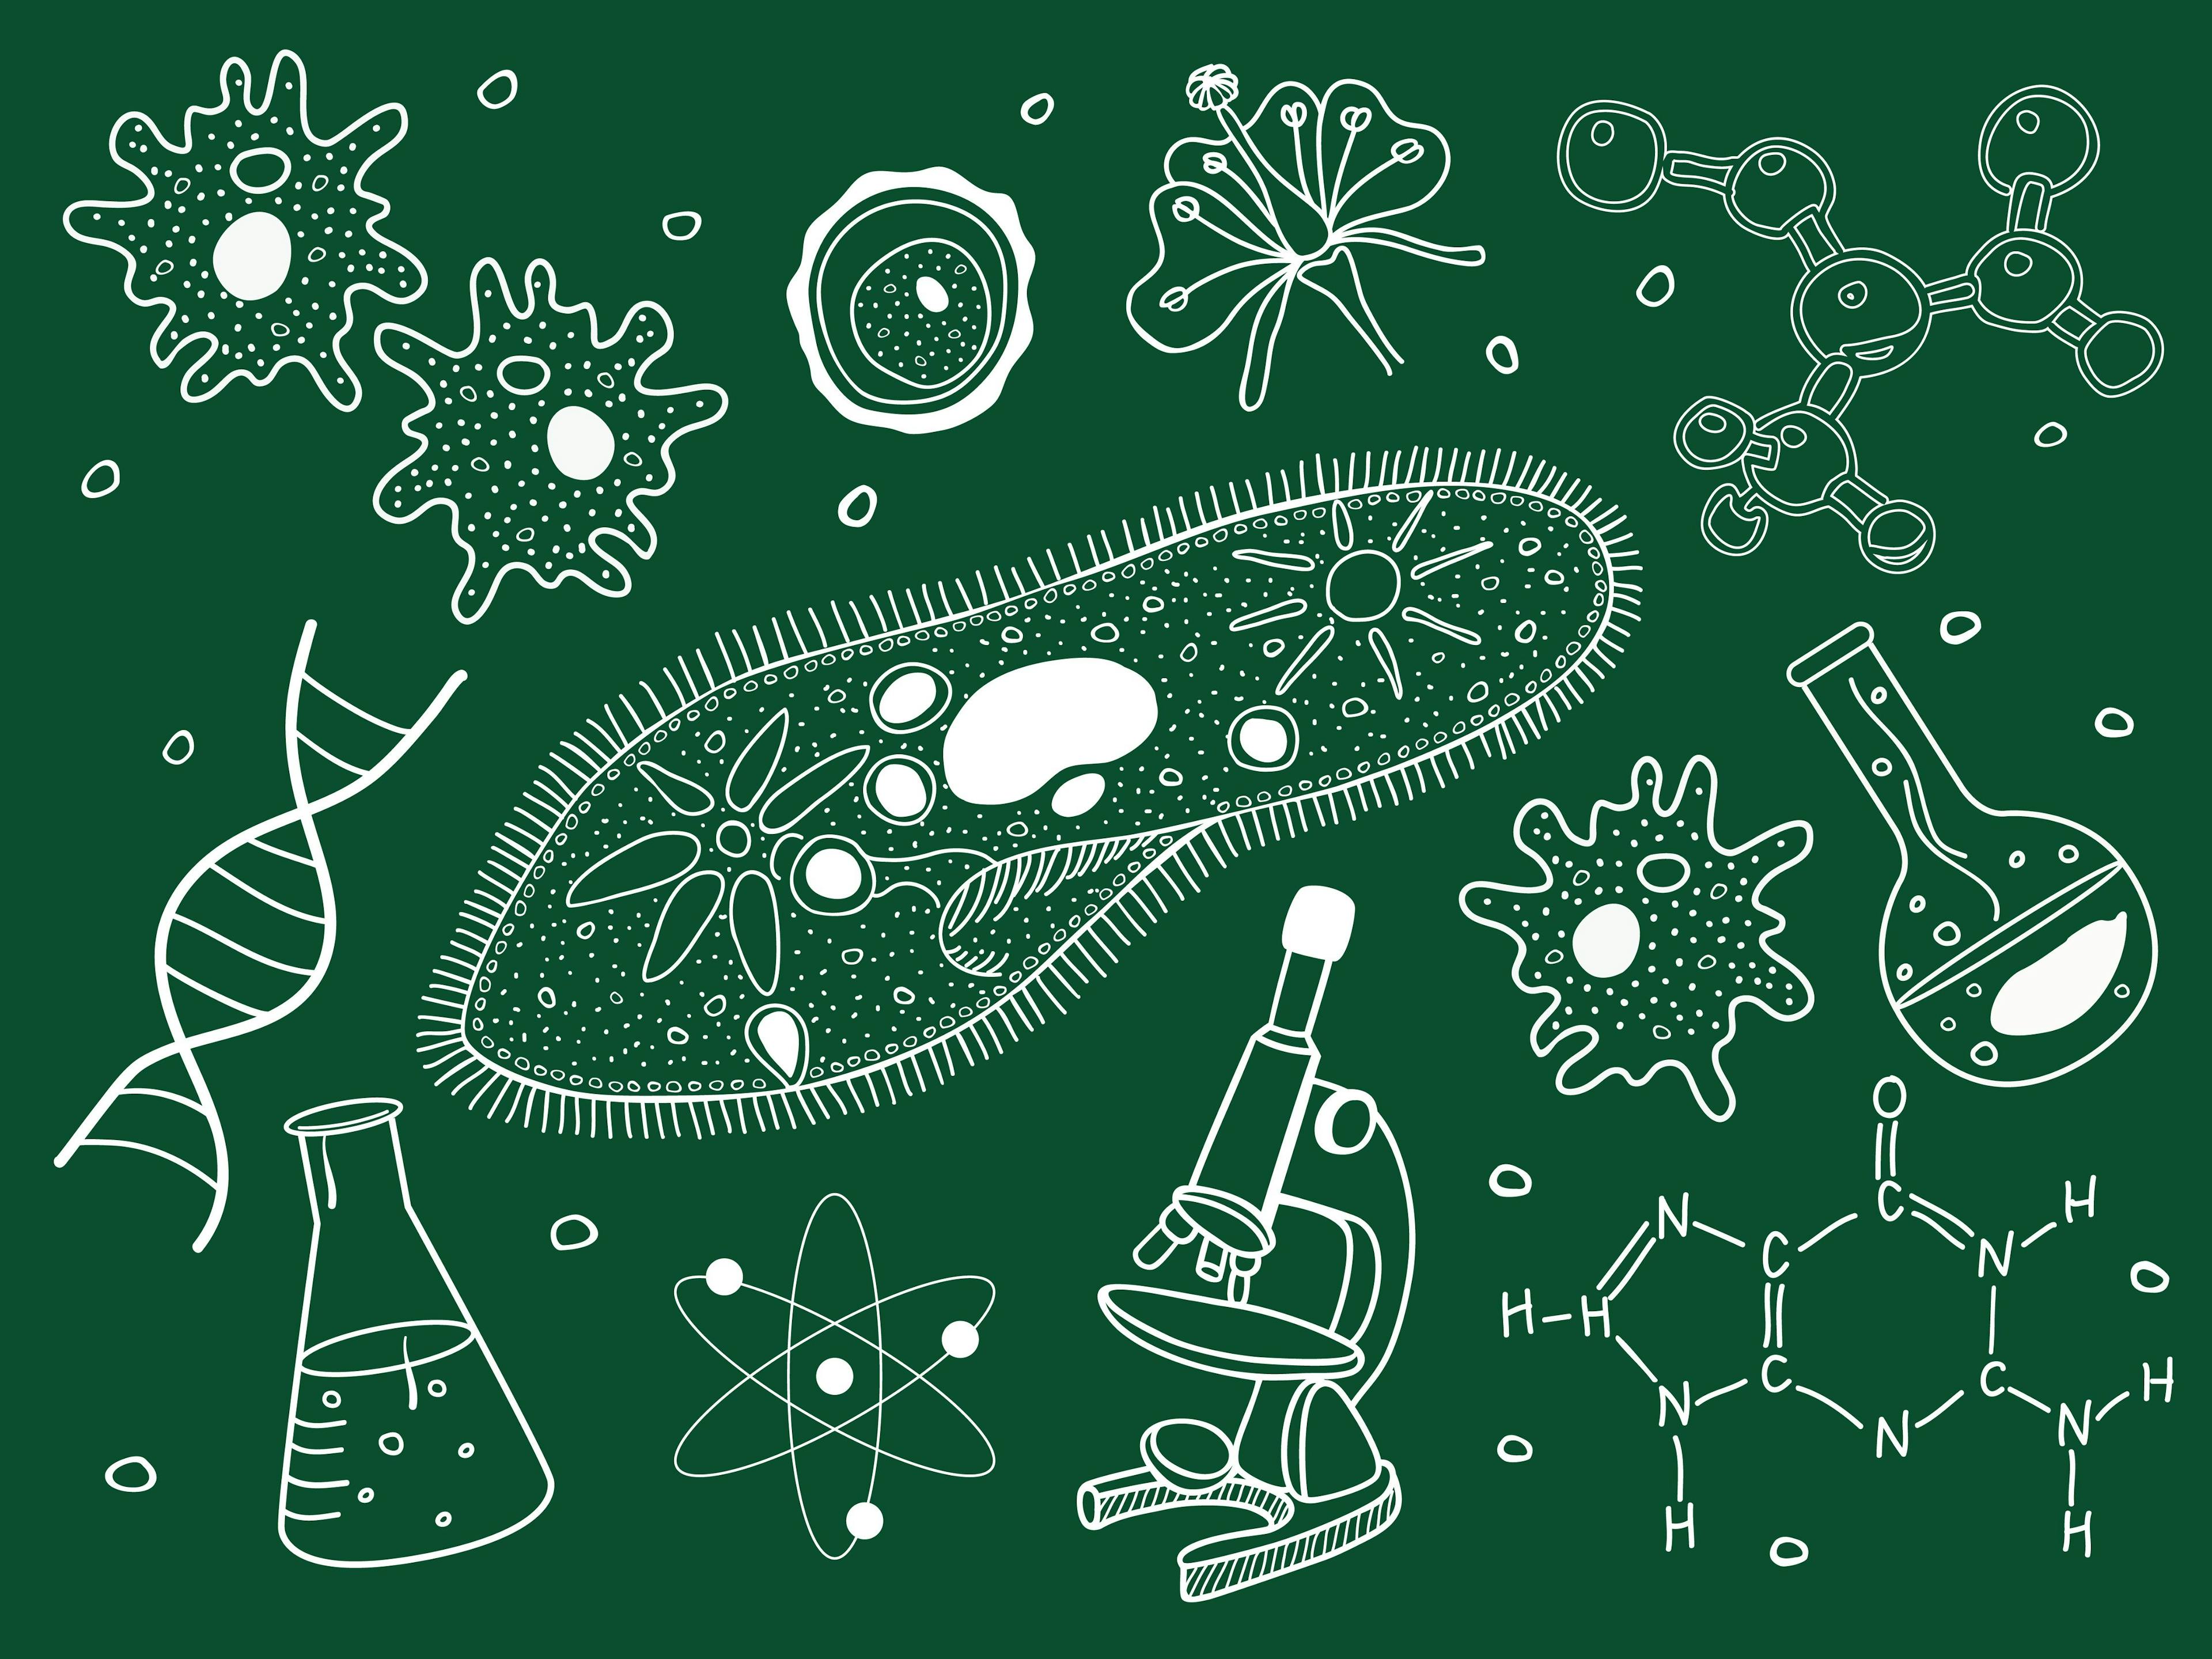 Biology sketches on school board. | Image Credit: © Millisenta - stock.adobe.com.